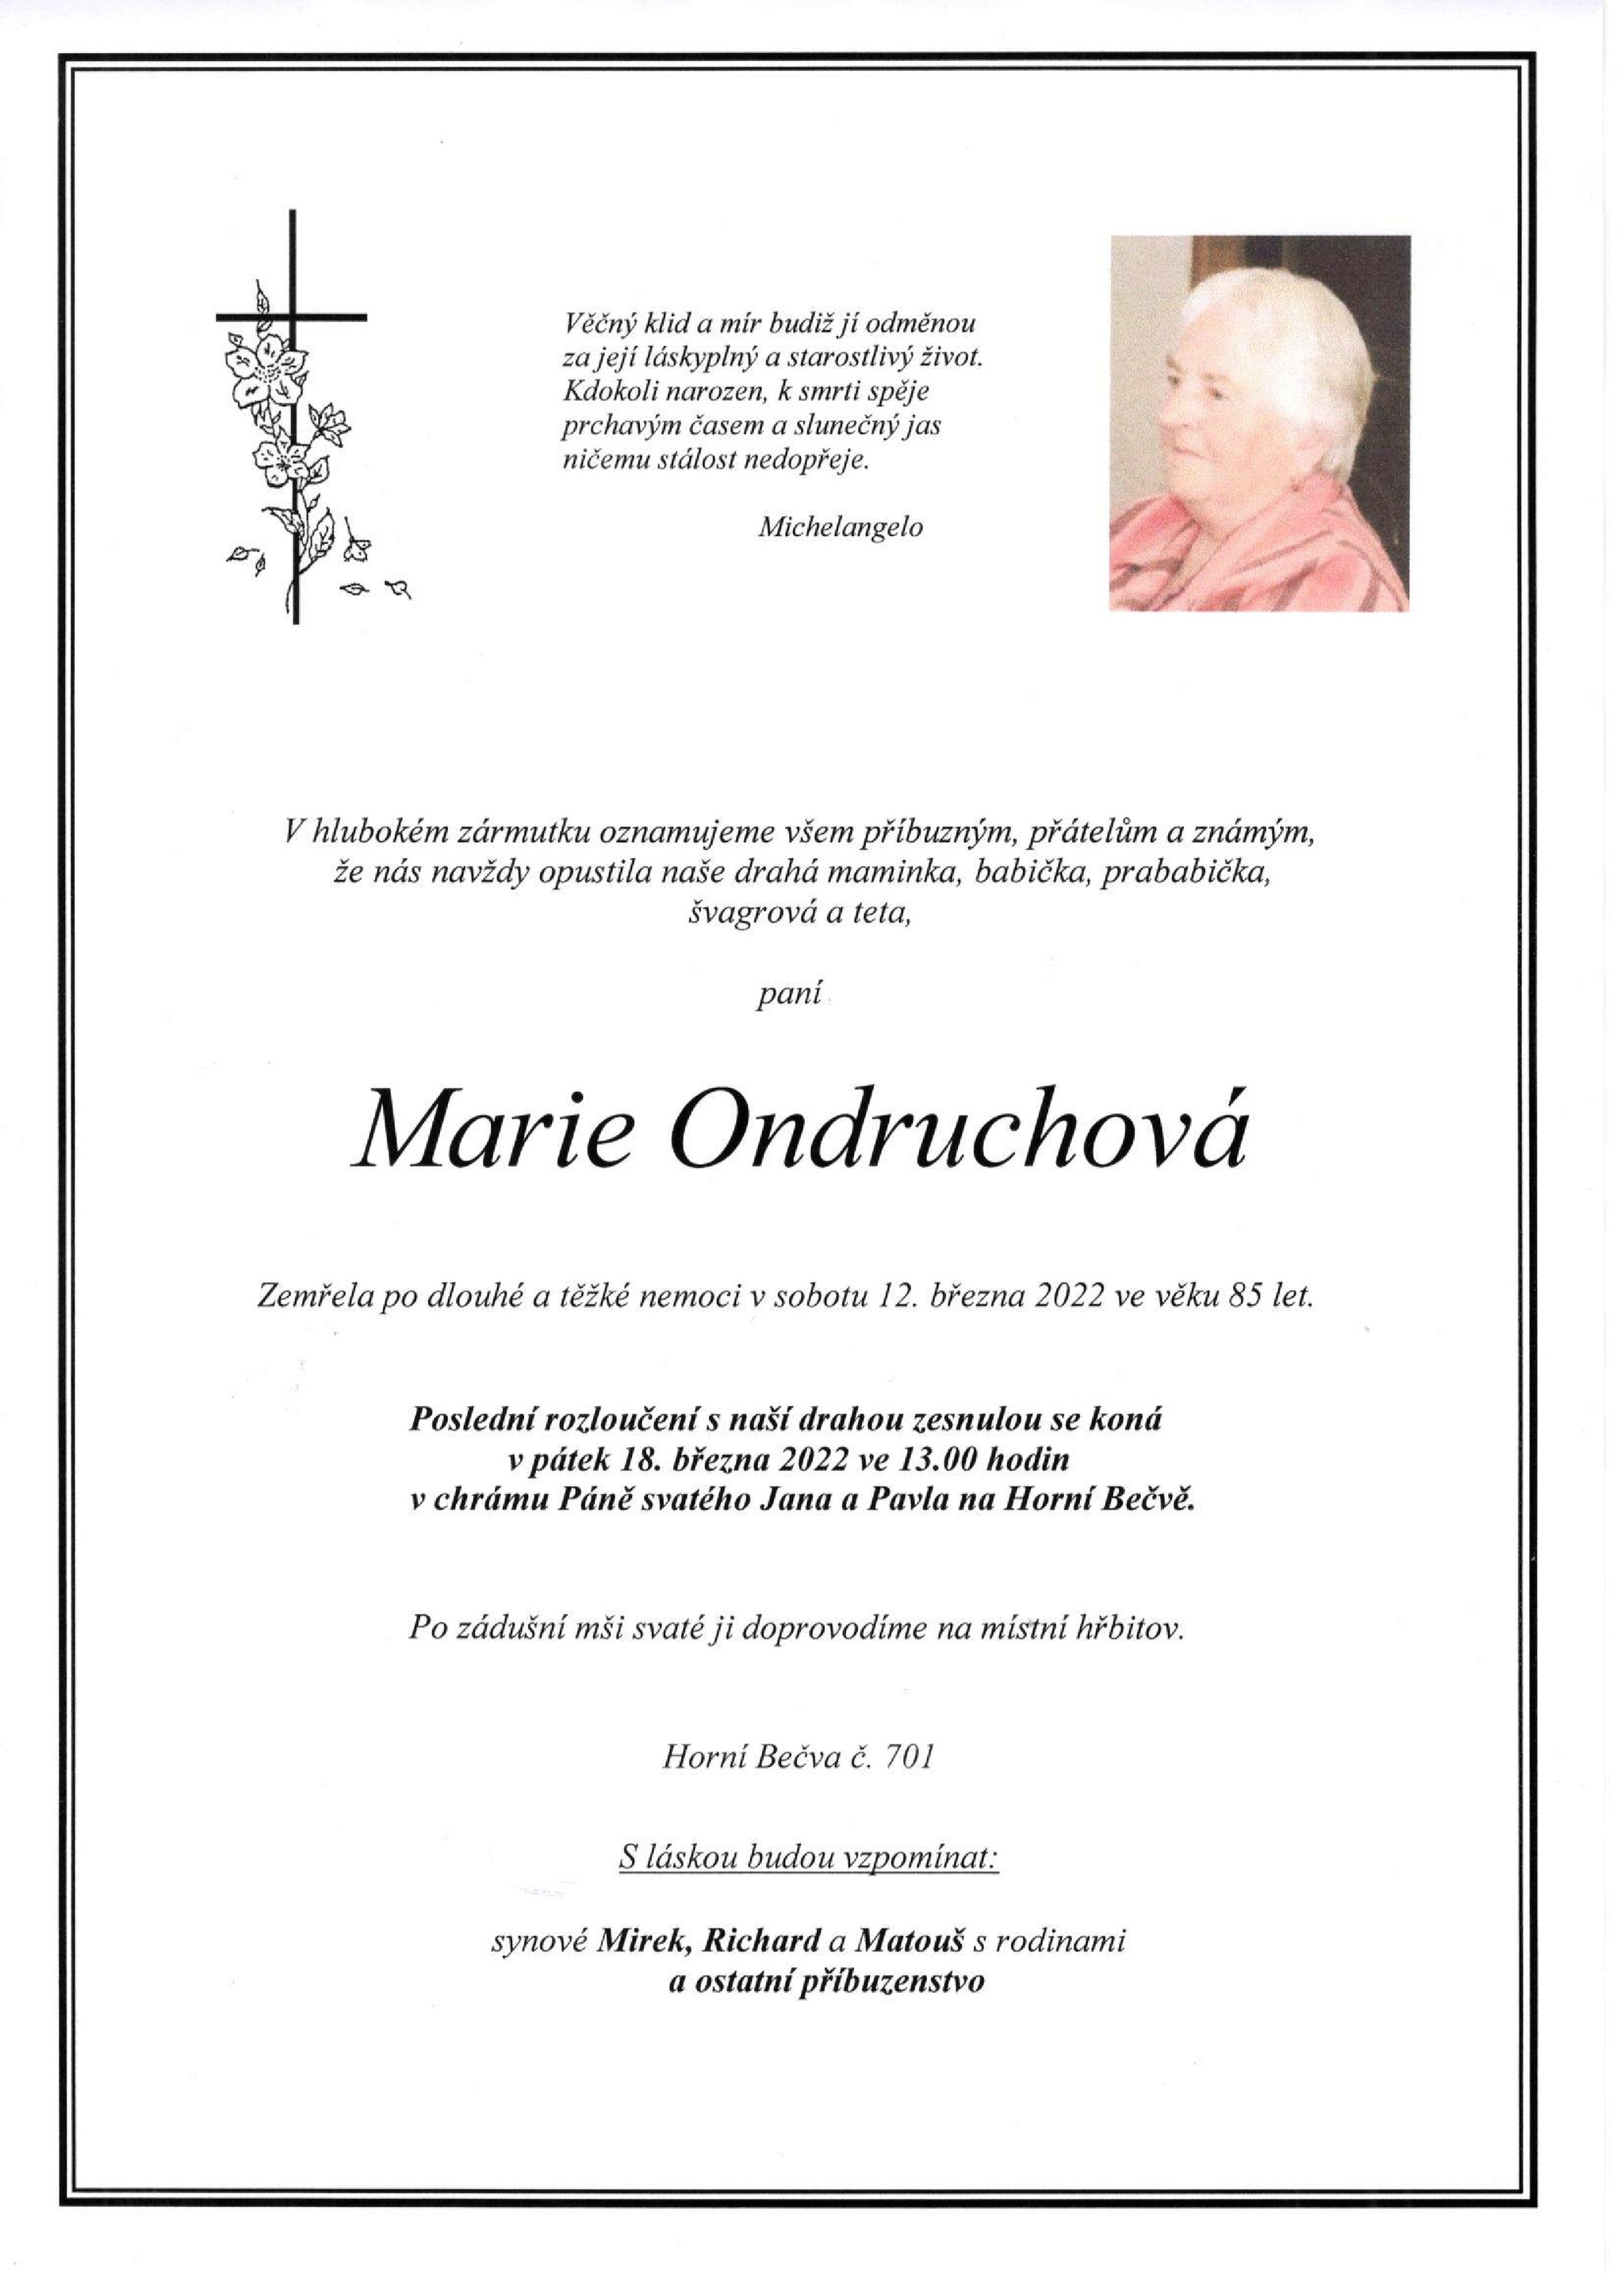 Marie Ondruchová